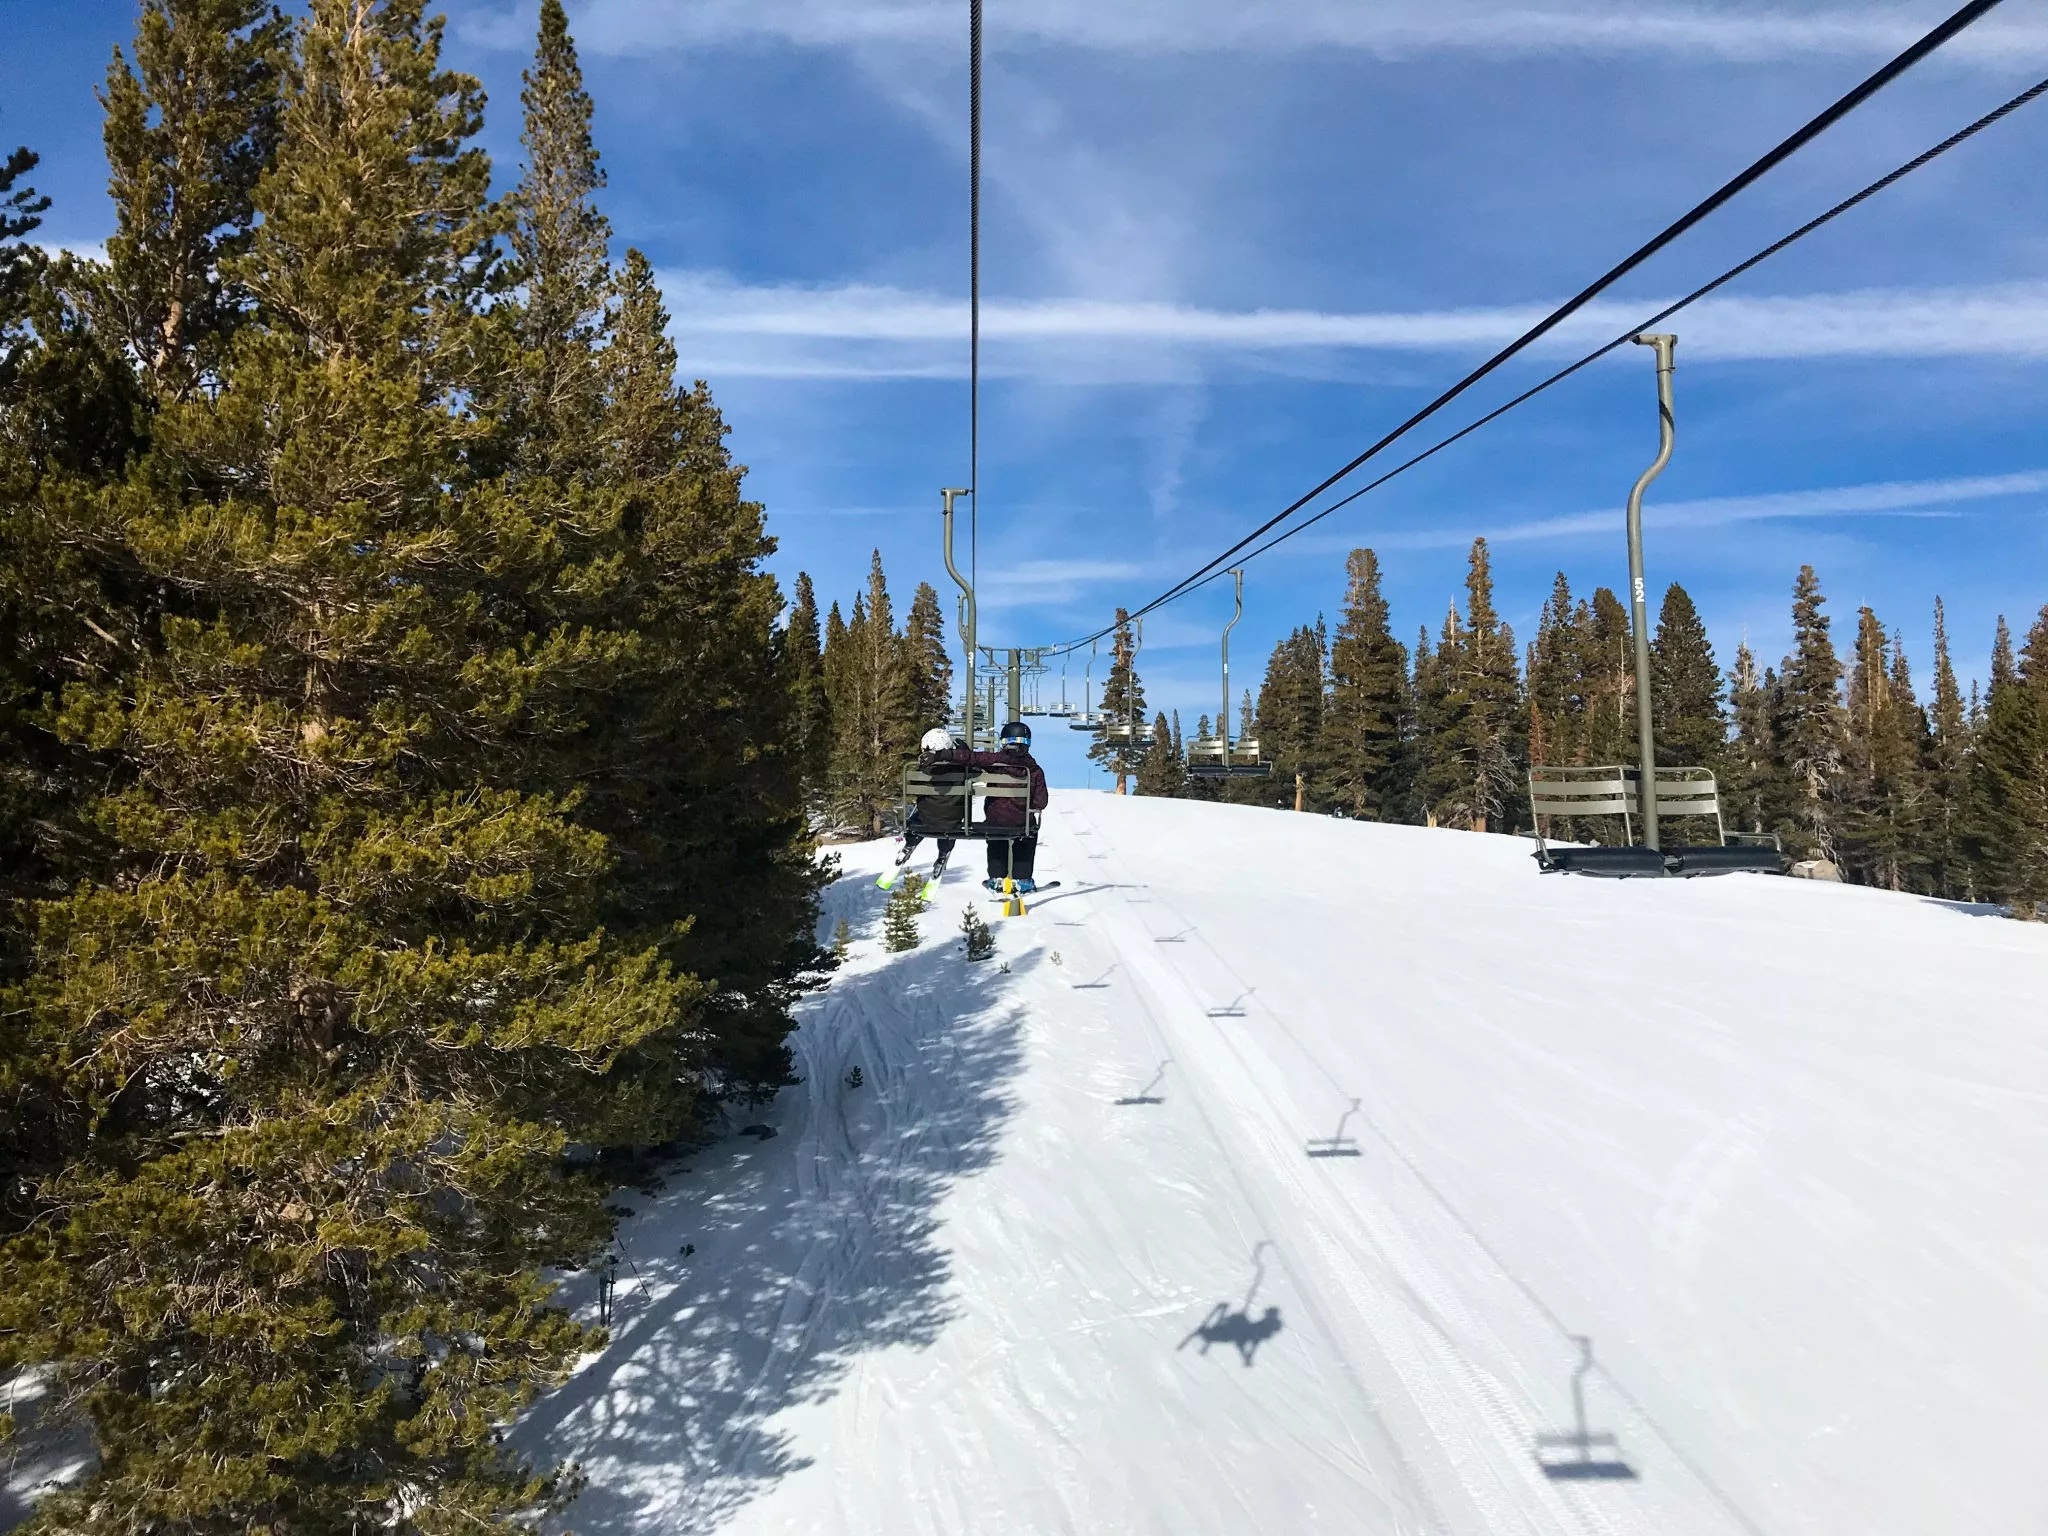 June Mountain Ski Area in USA, North America | Mountaineering,Skiing - Rated 4